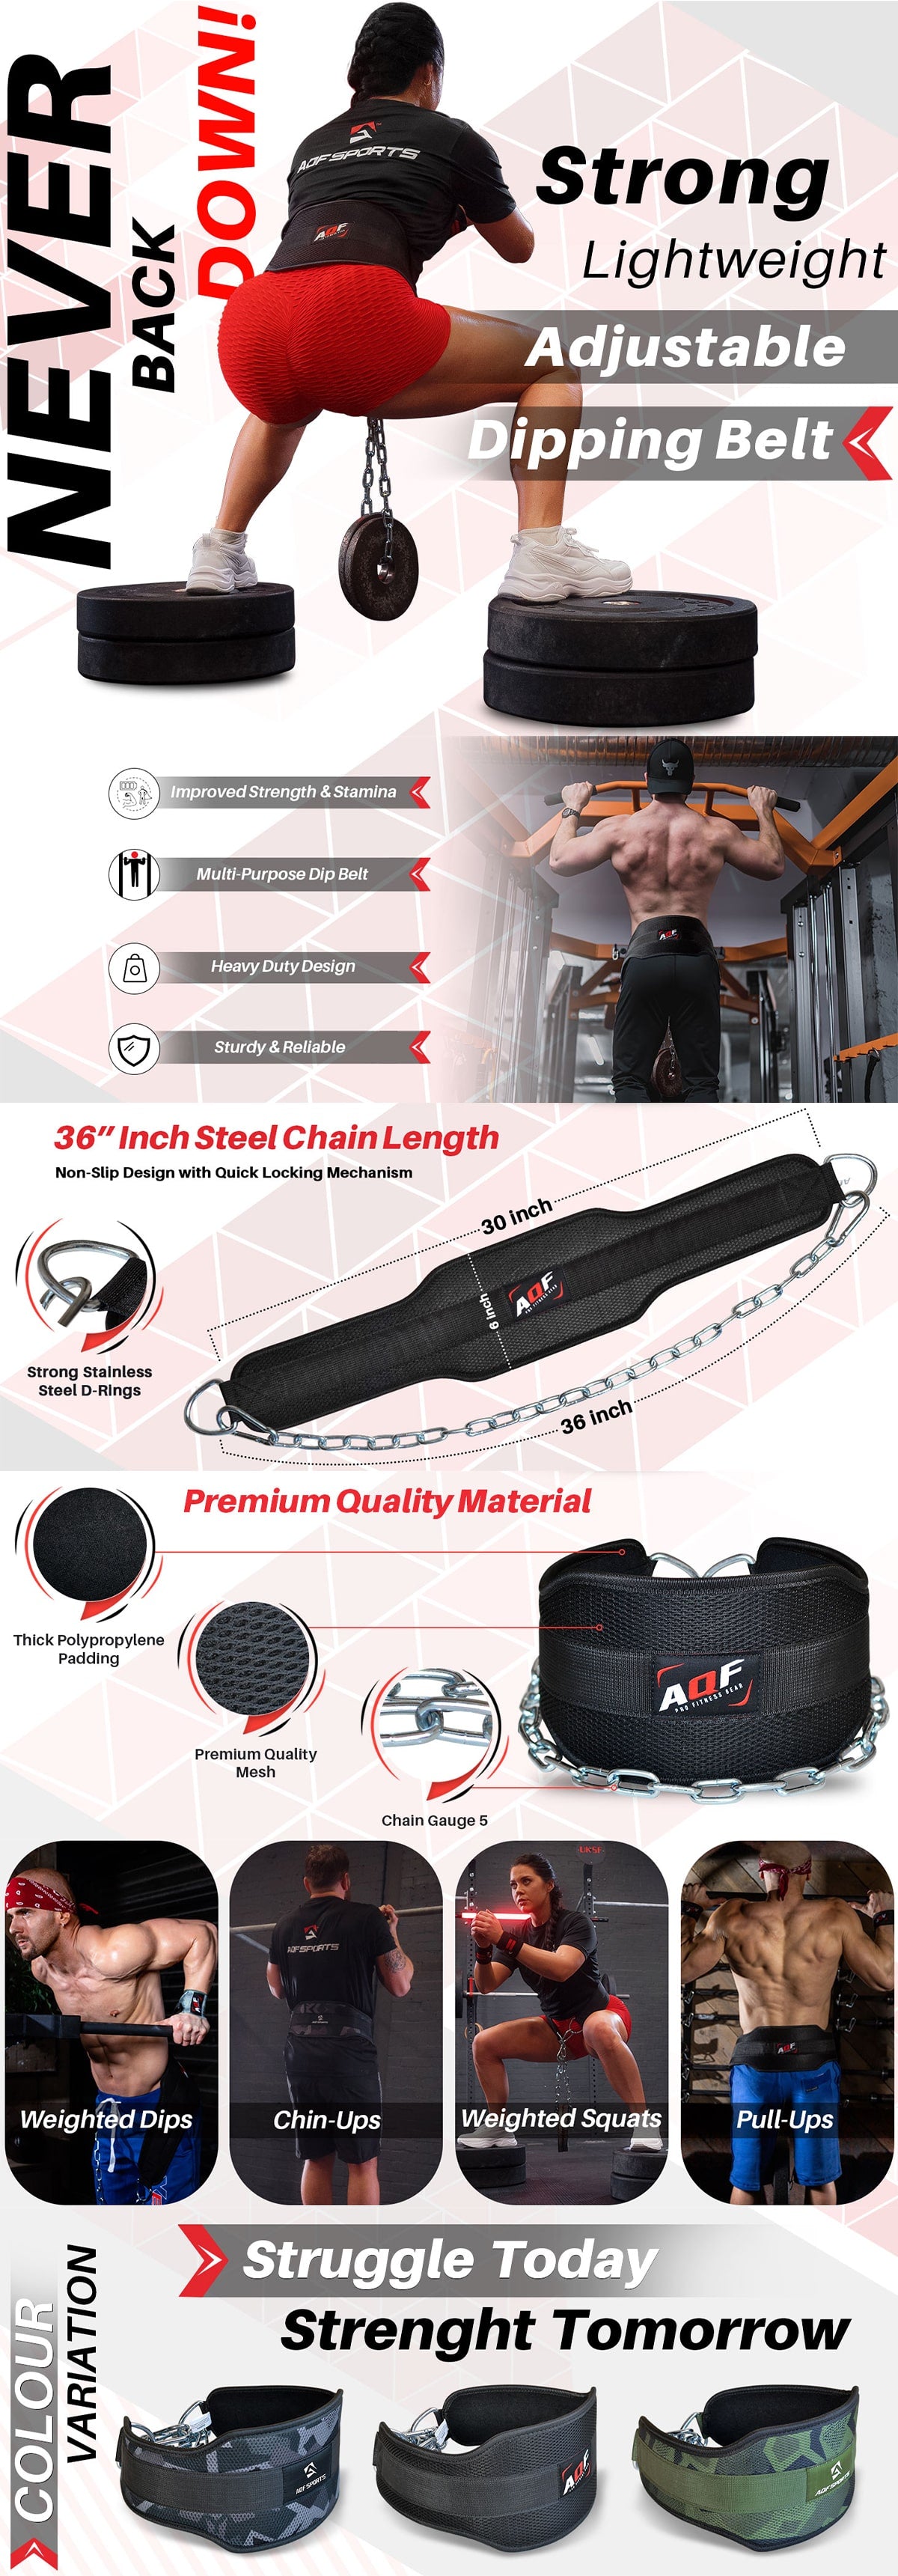 AQF Lightweight and Adjustable Dipping Belt  - AQF Sports